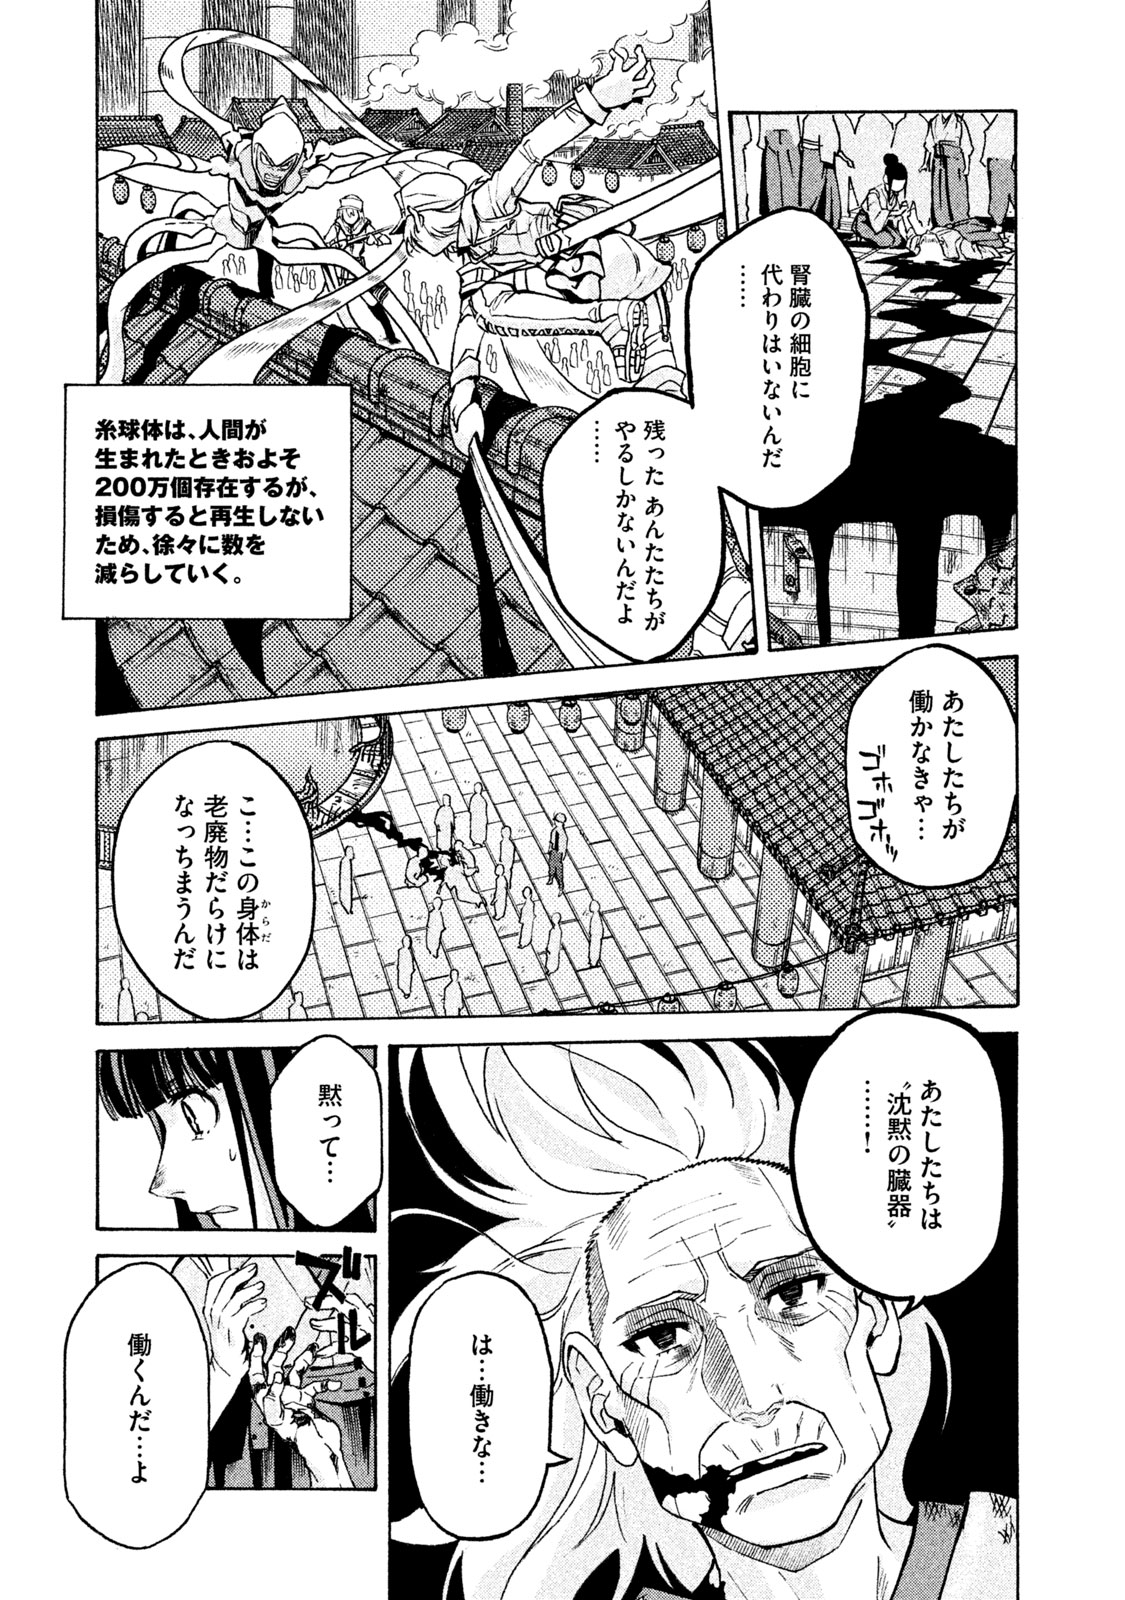 Hataraku Saibou BLACK - Chapter 14 - Page 13